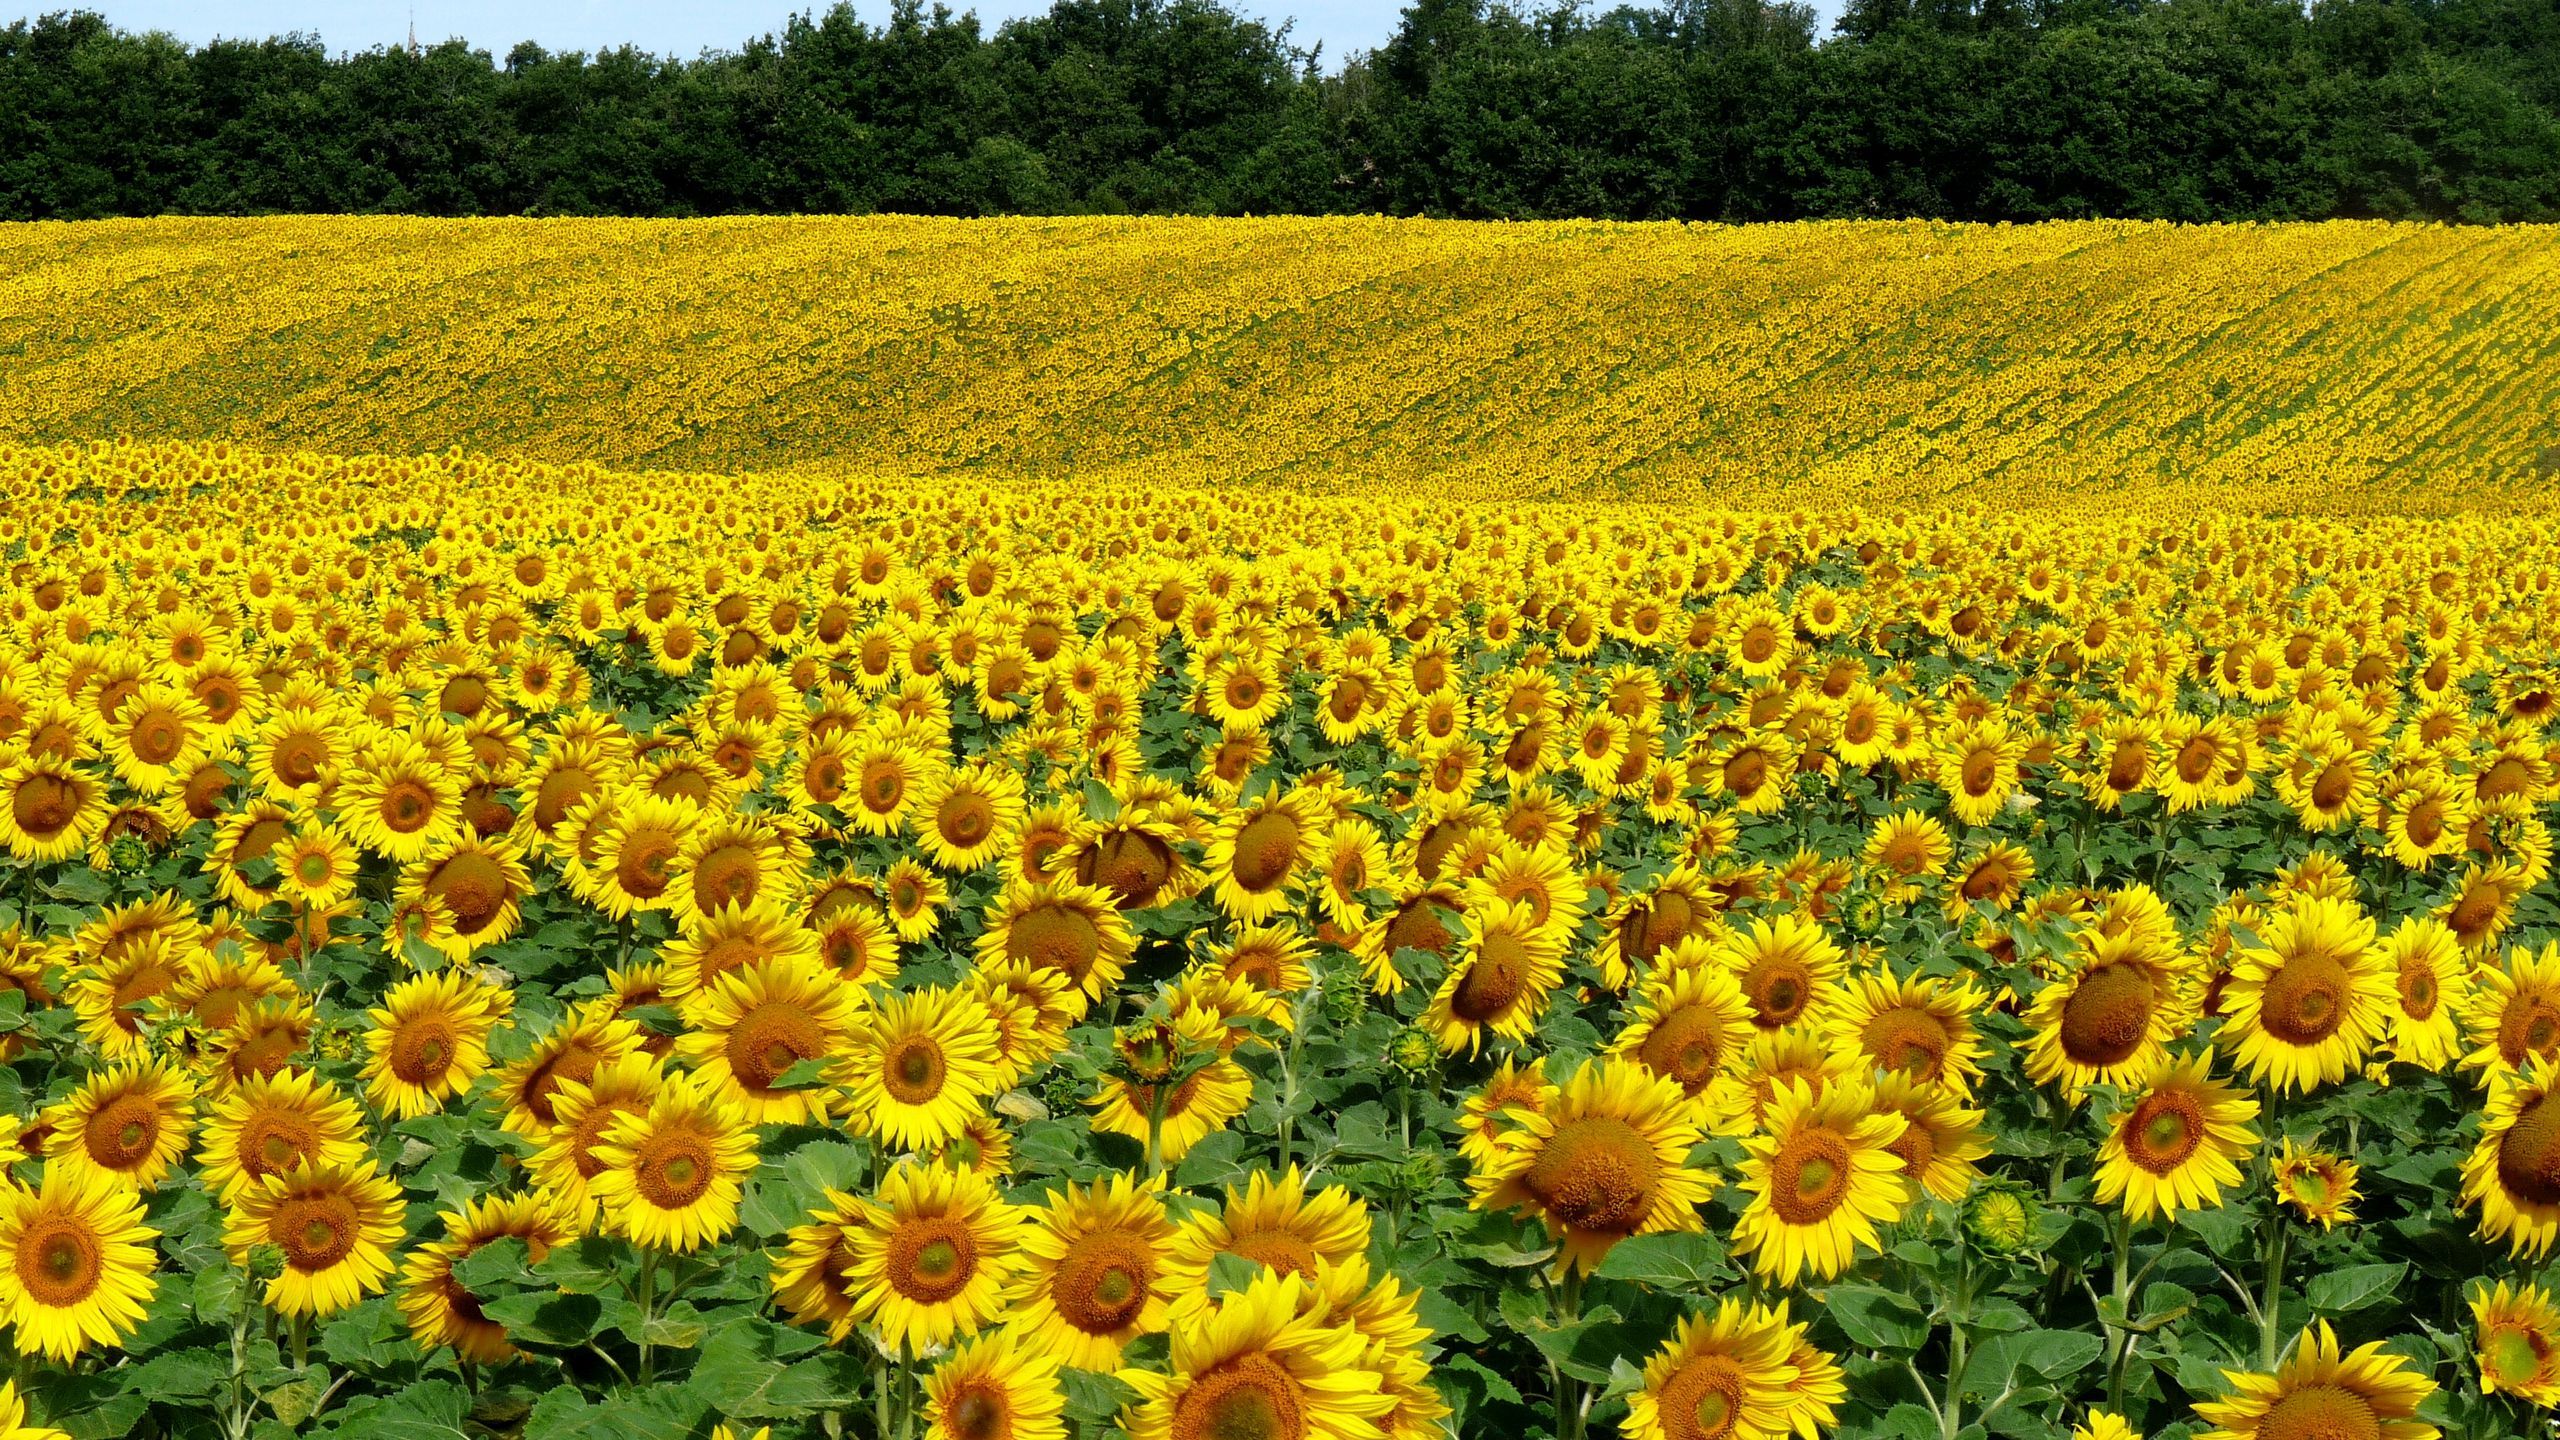 Download wallpaper 2560x1440 field, sunflowers, landscape, summer